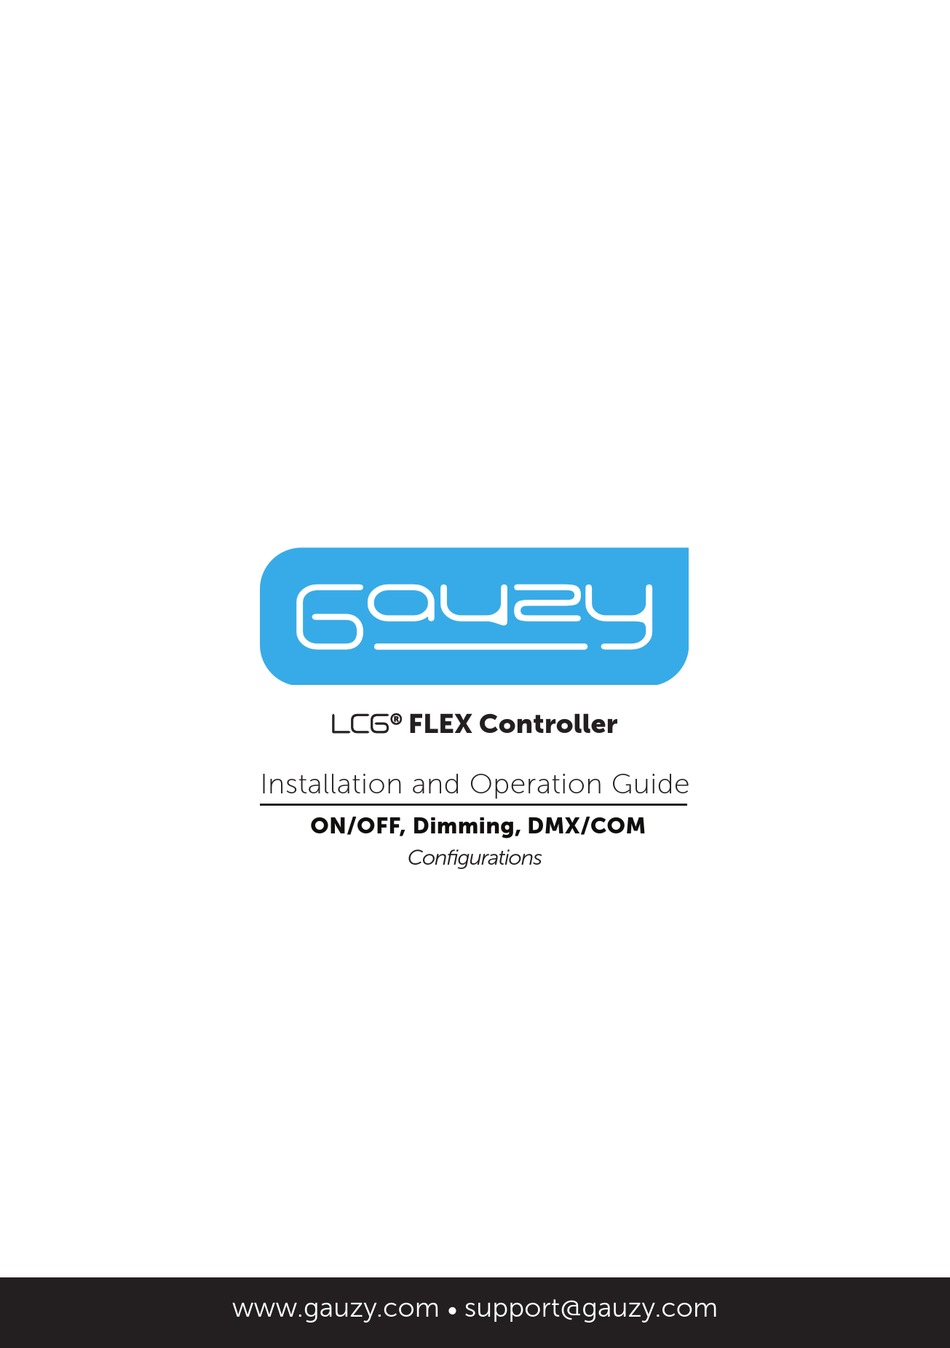 GAUZY LC6 FLEX CONTROLLER INSTALLATION AND OPERATION MANUAL Pdf ...